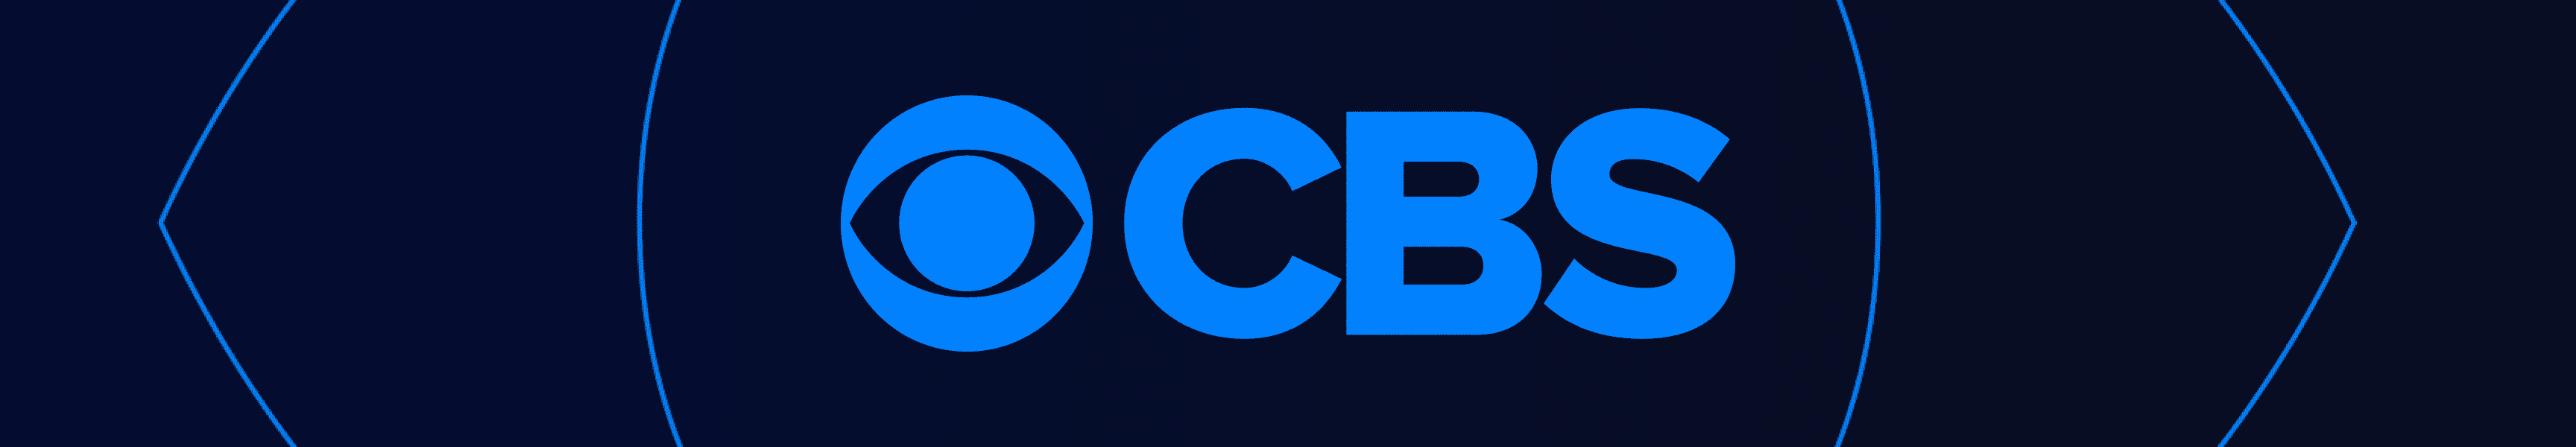 CBS Entertainment Sombreros